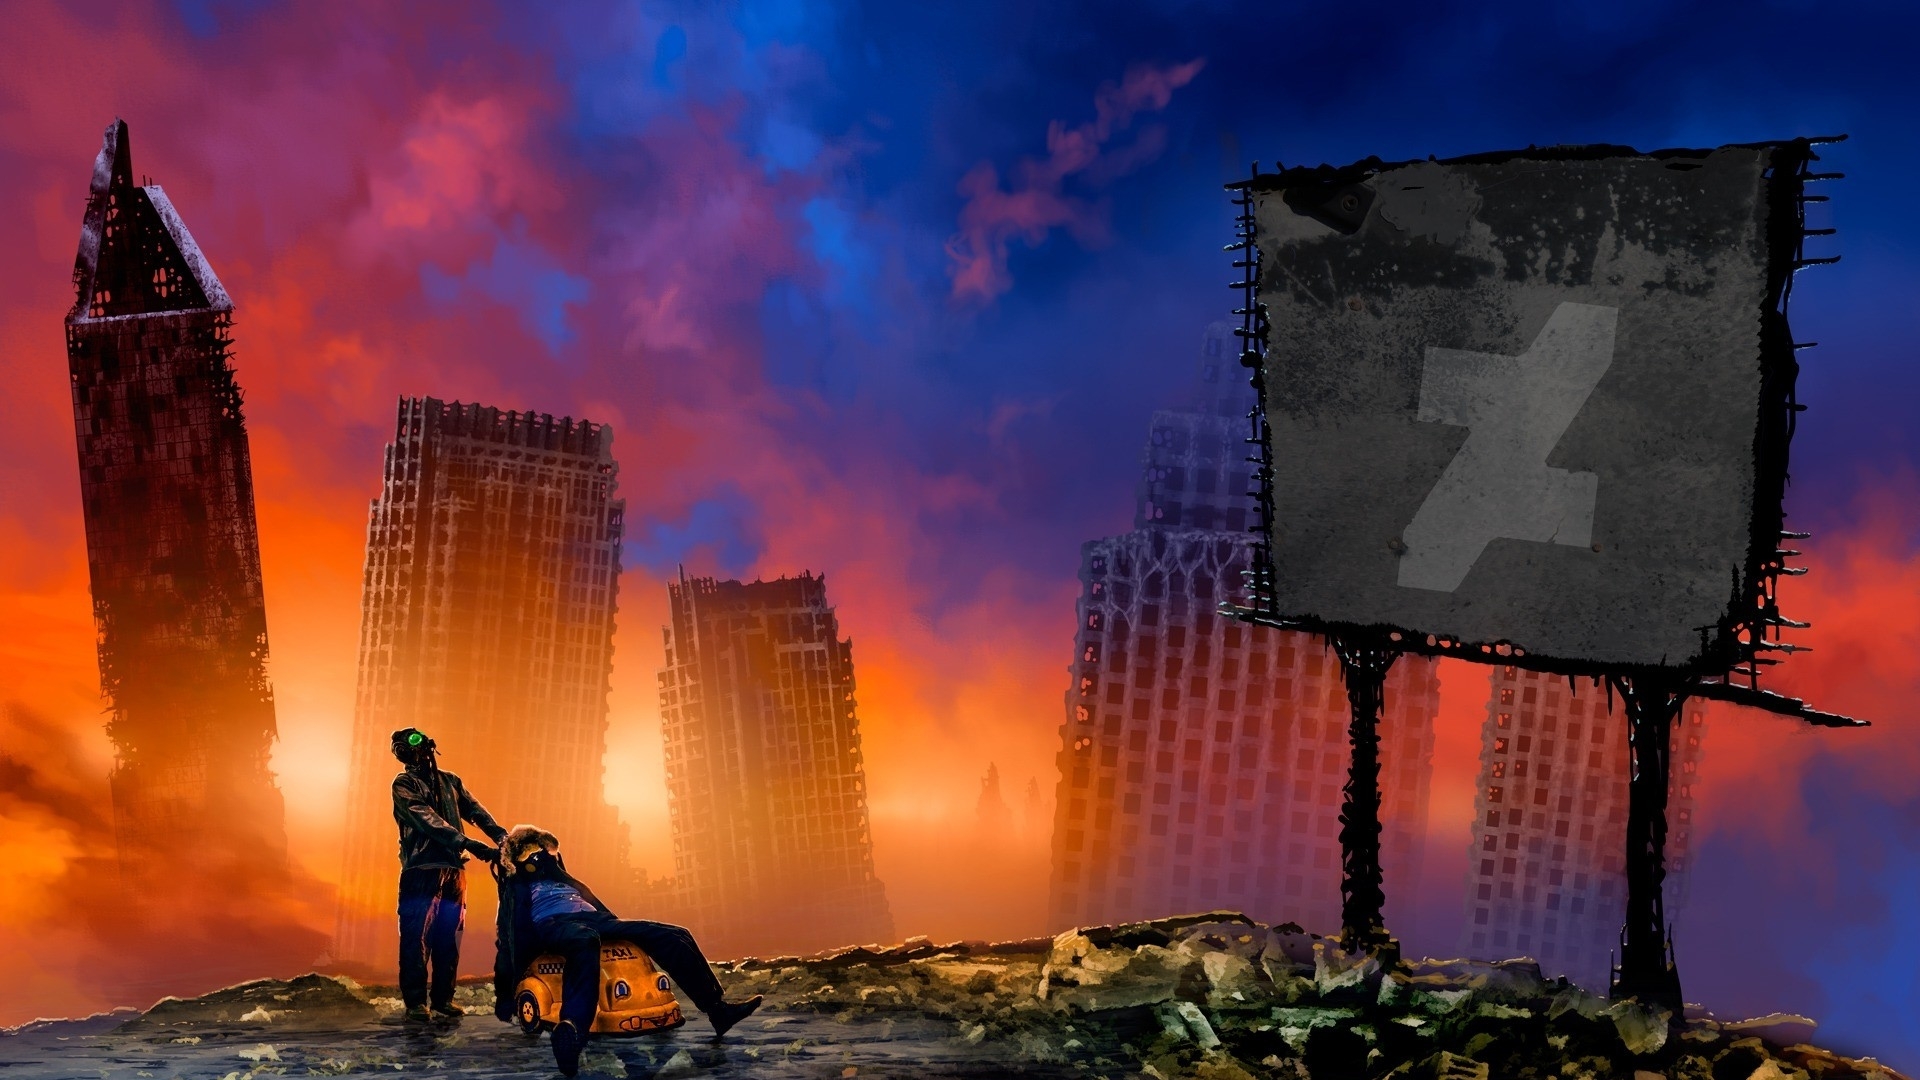 Taking A Walk In The Destroyed City - Fond De Ville Detruit - HD Wallpaper 